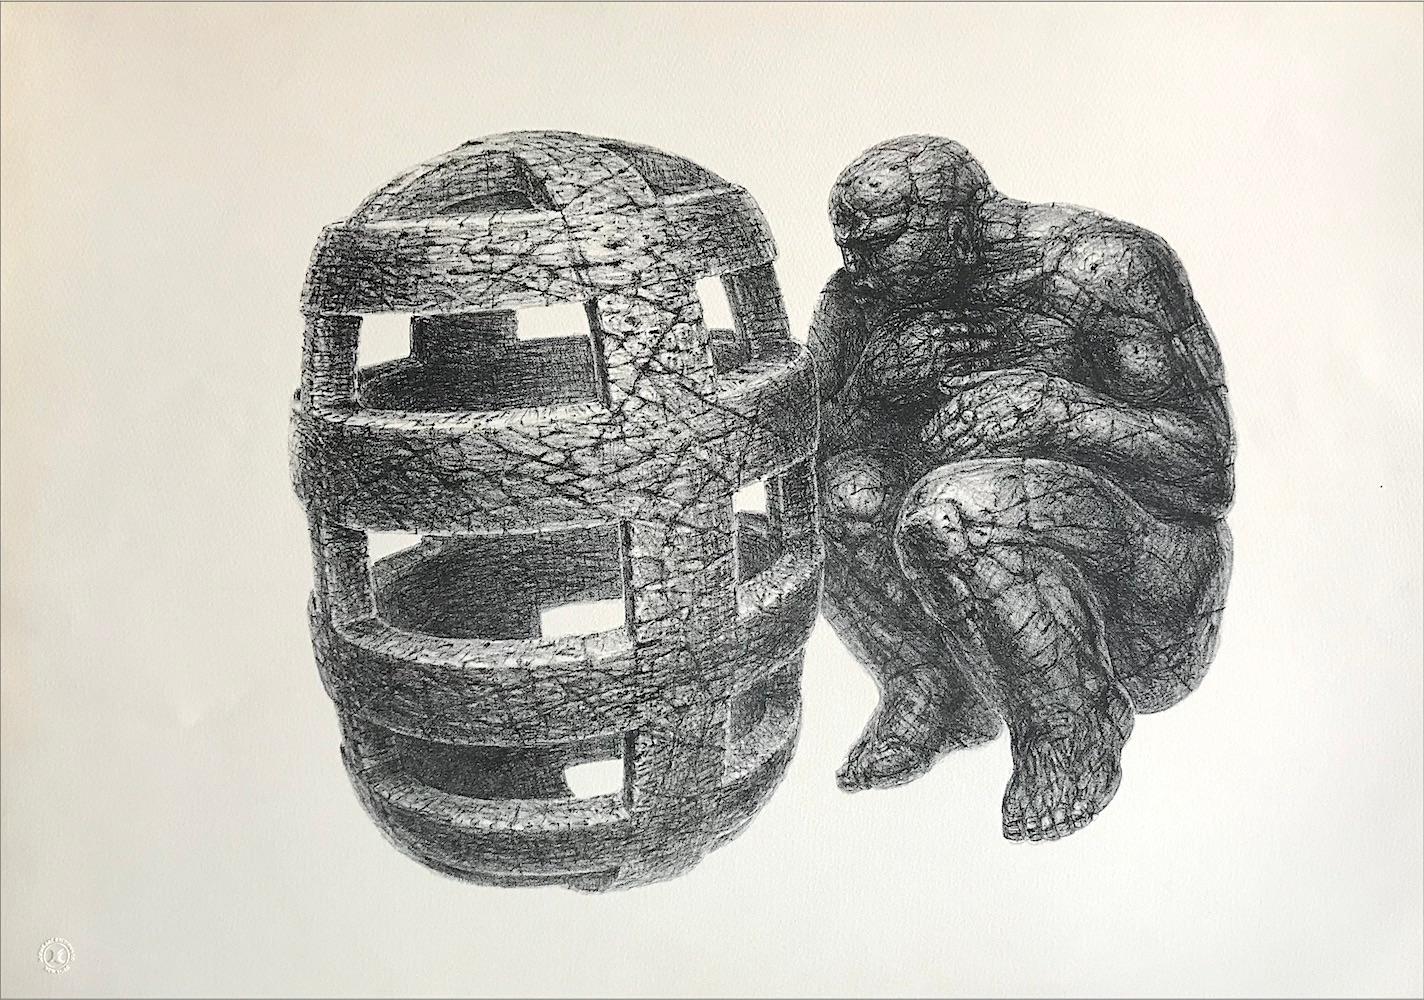 UNCAGED MAN Hand Drawn Lithograph, Stone Man, Consciousness, Meditation - Print by De Es Schwertberger